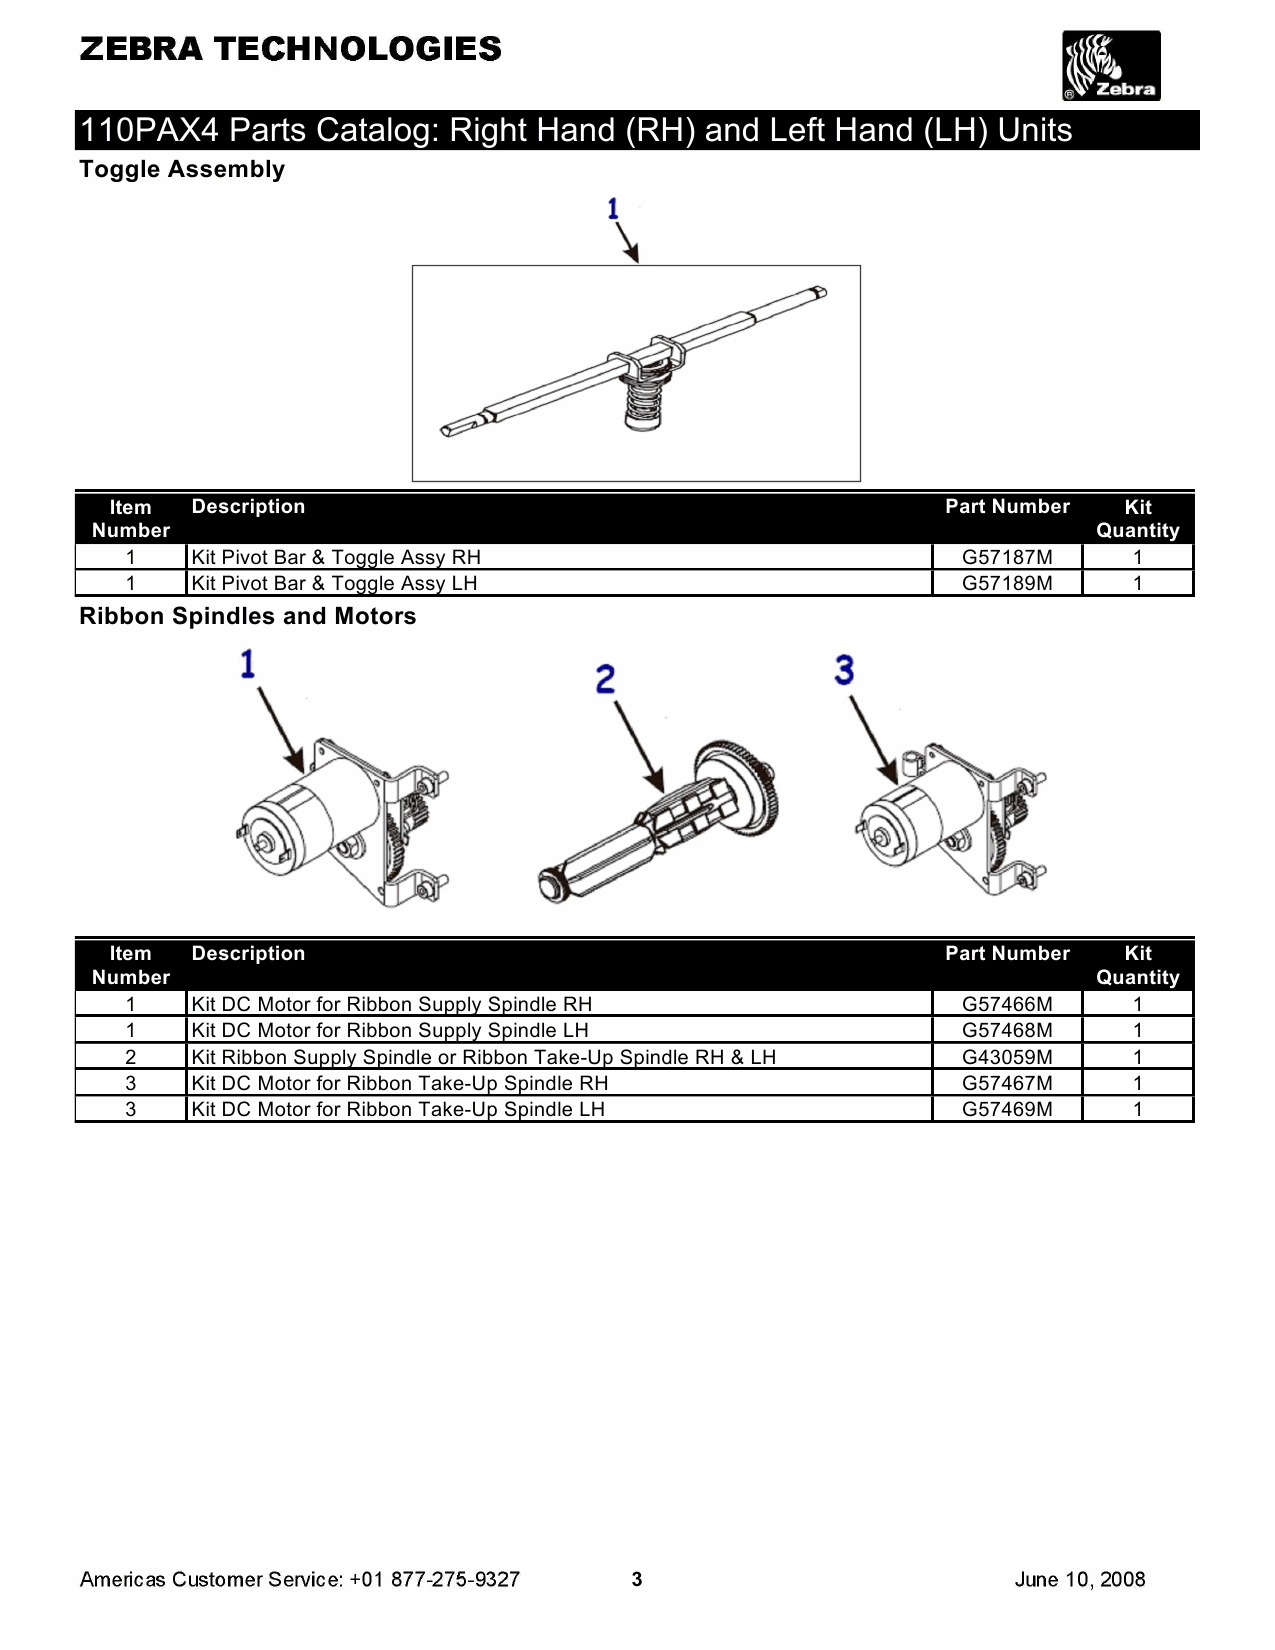 Zebra Label 110PAX4 Parts Catalog-3